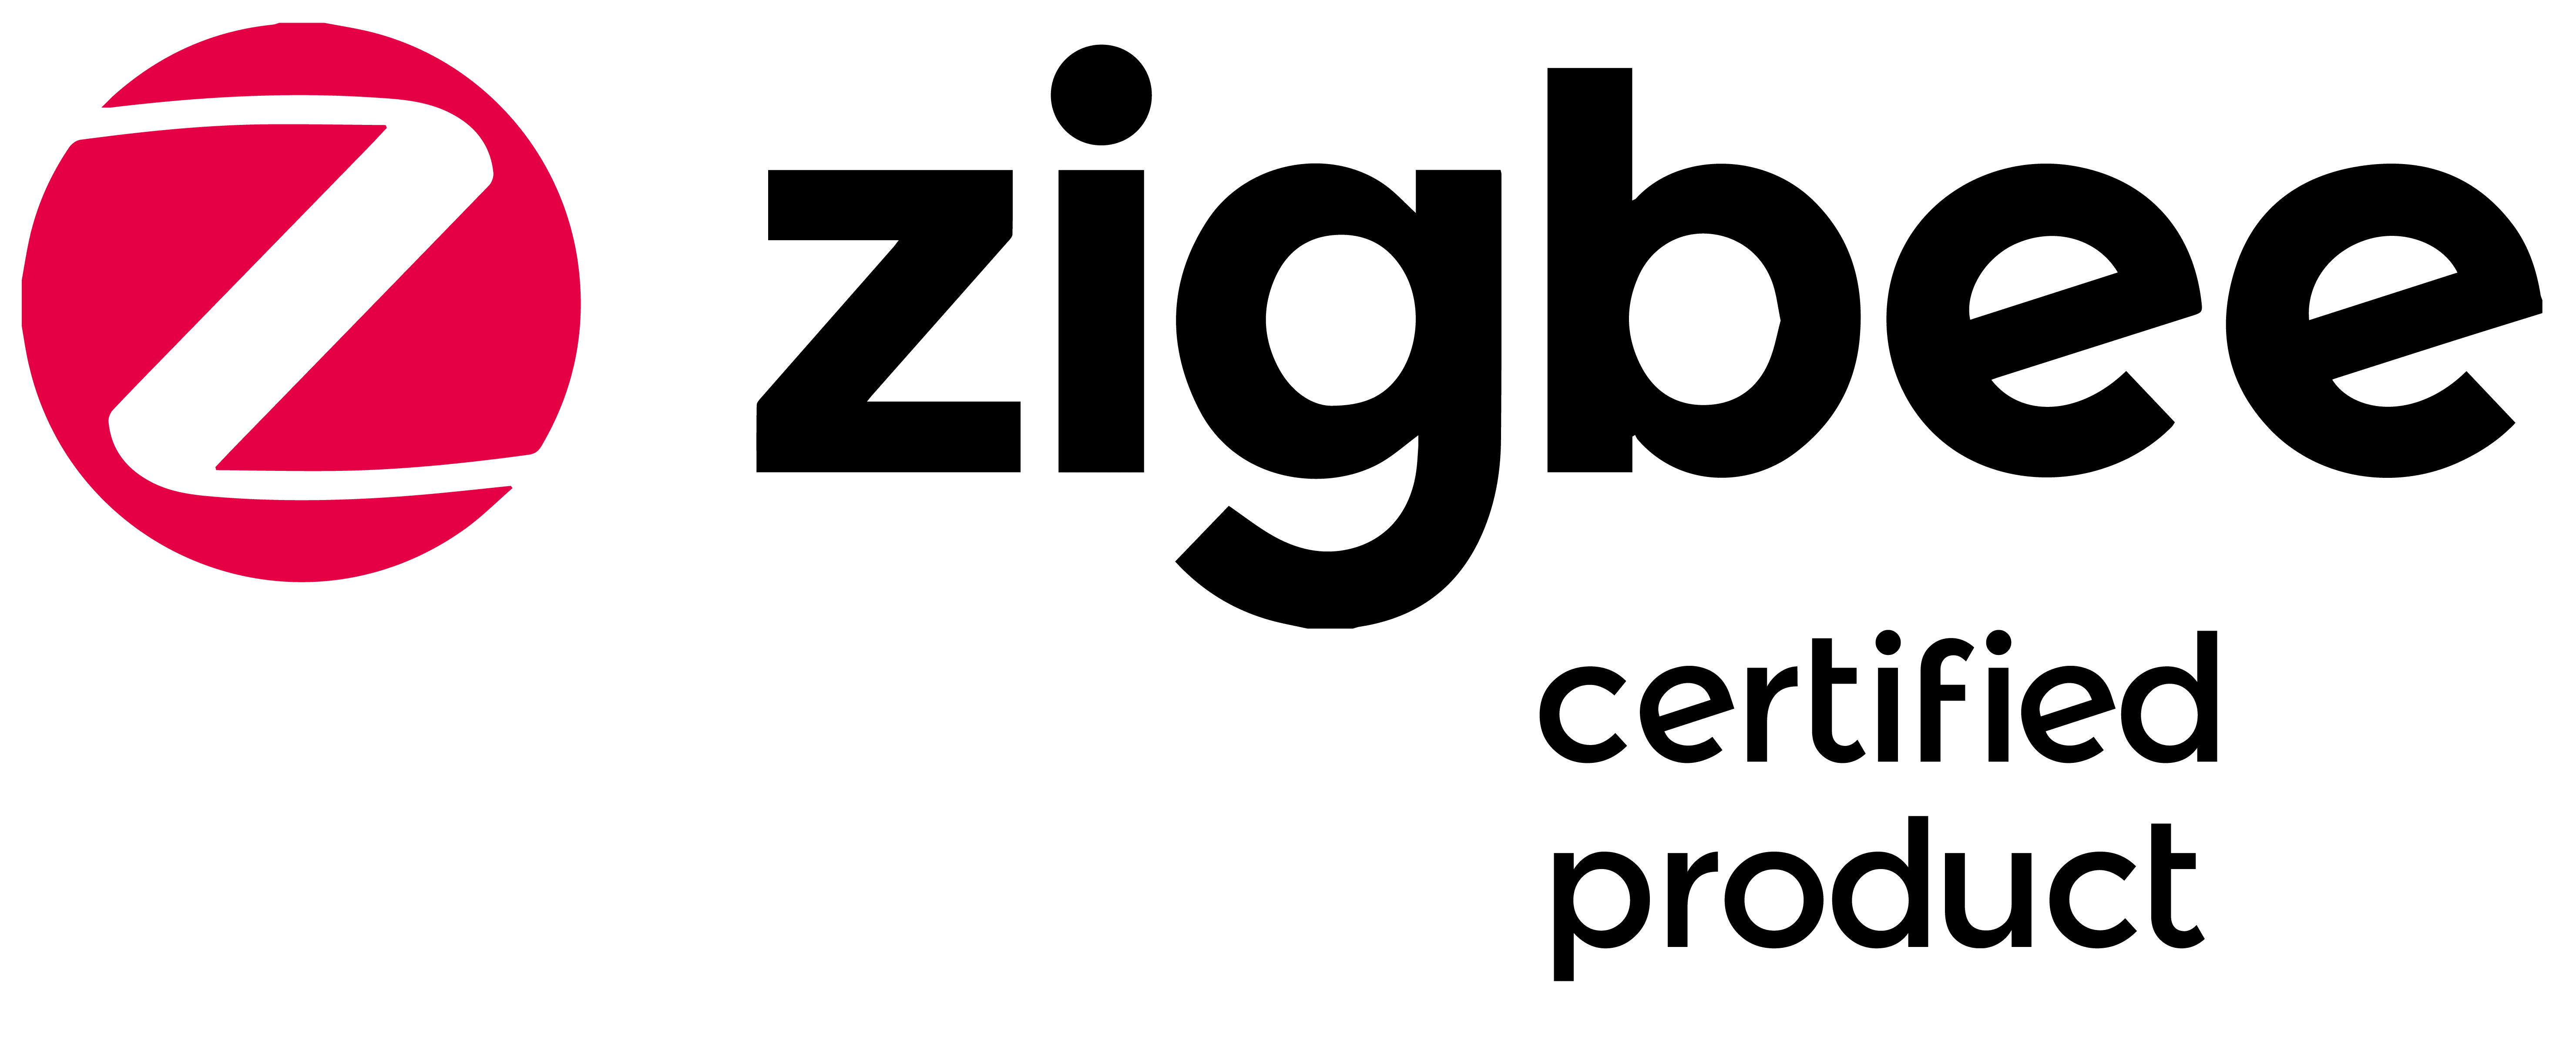 Zigbee Home Automation 1.2 certification